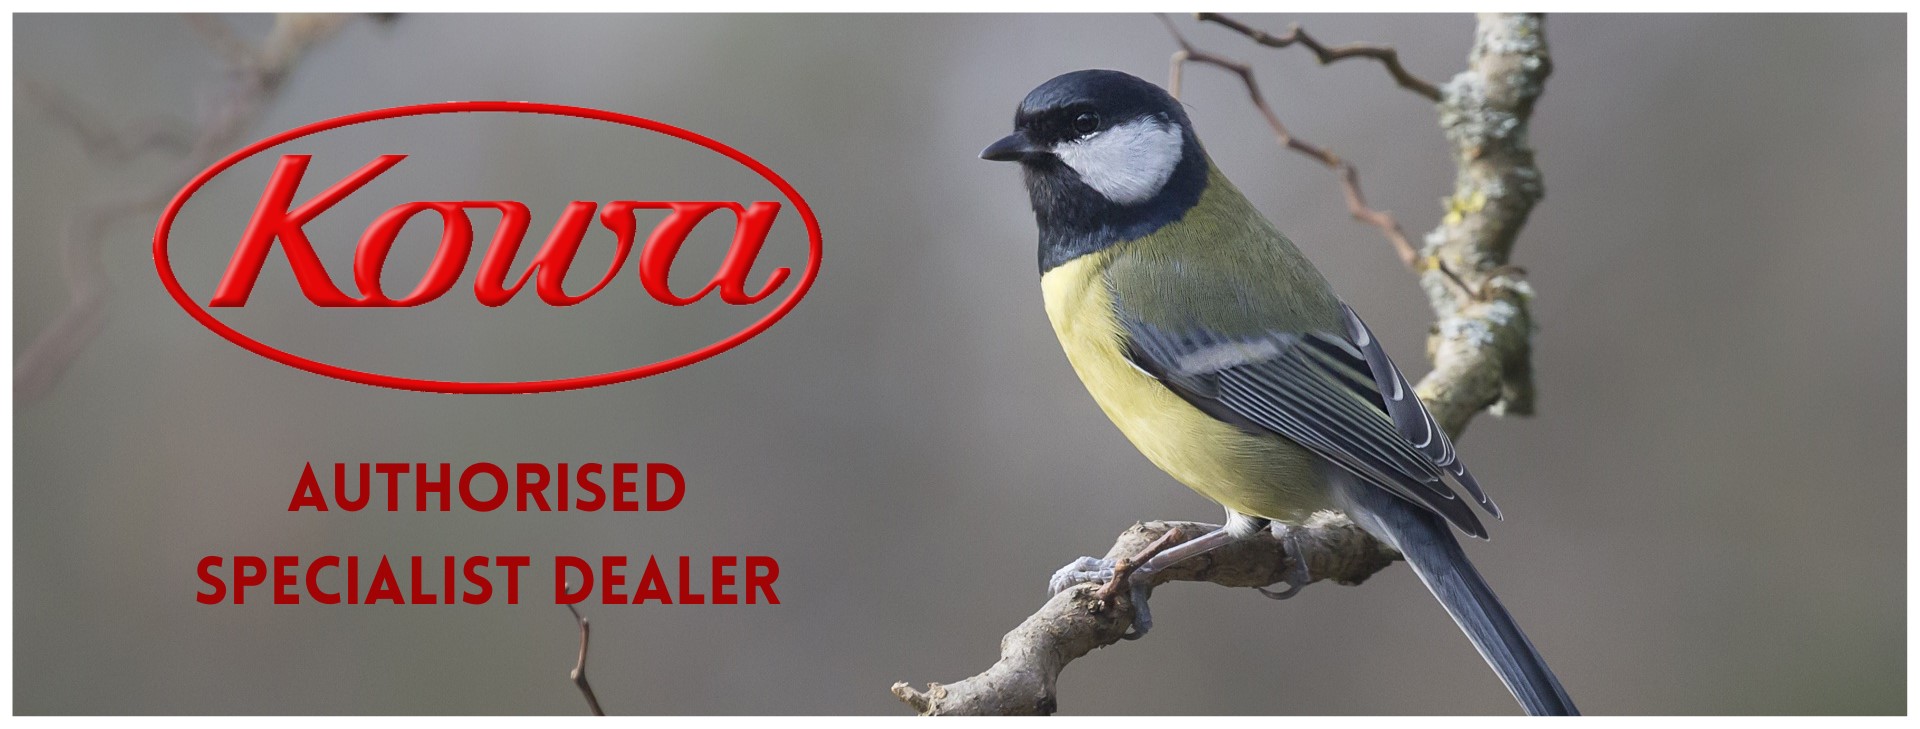 Ace Optics is a Kowa authorised specialist dealer. Bird picture